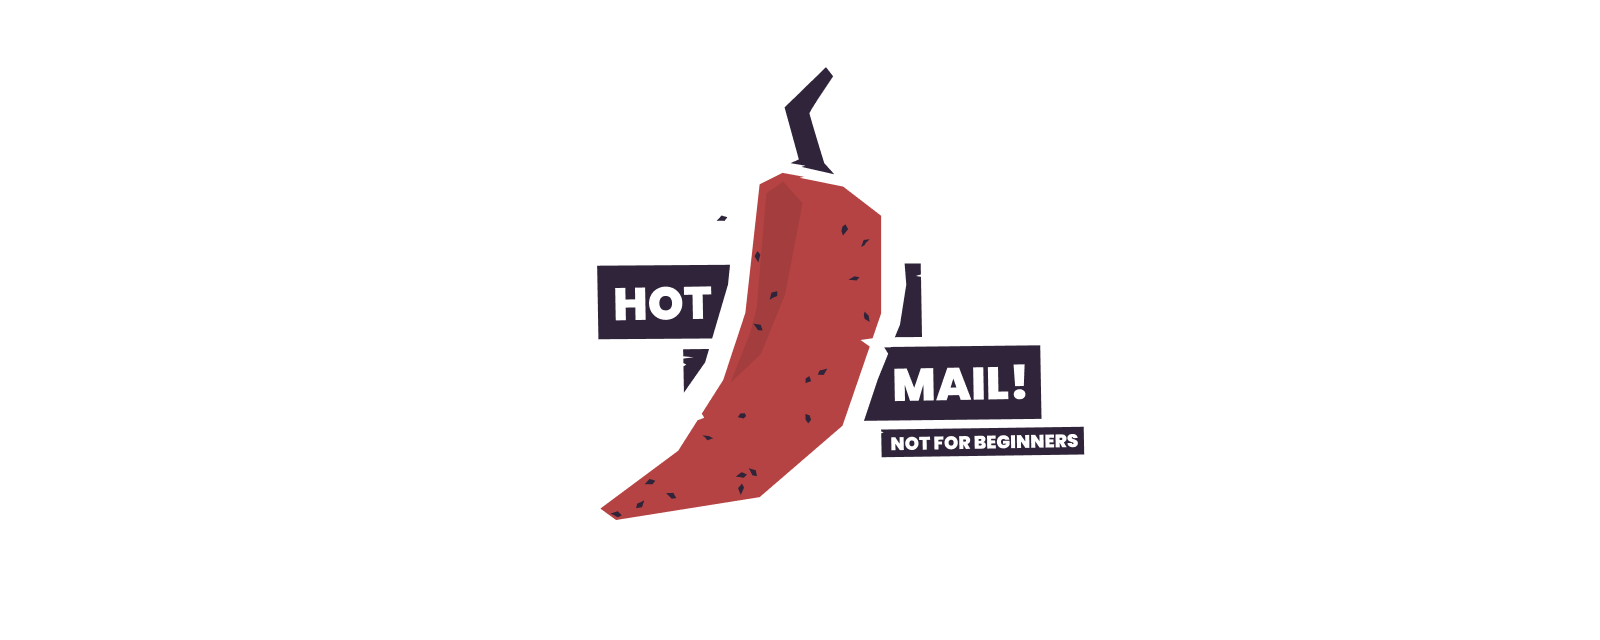 The logo of Jens Lennartsson's Hot Mail newsletter